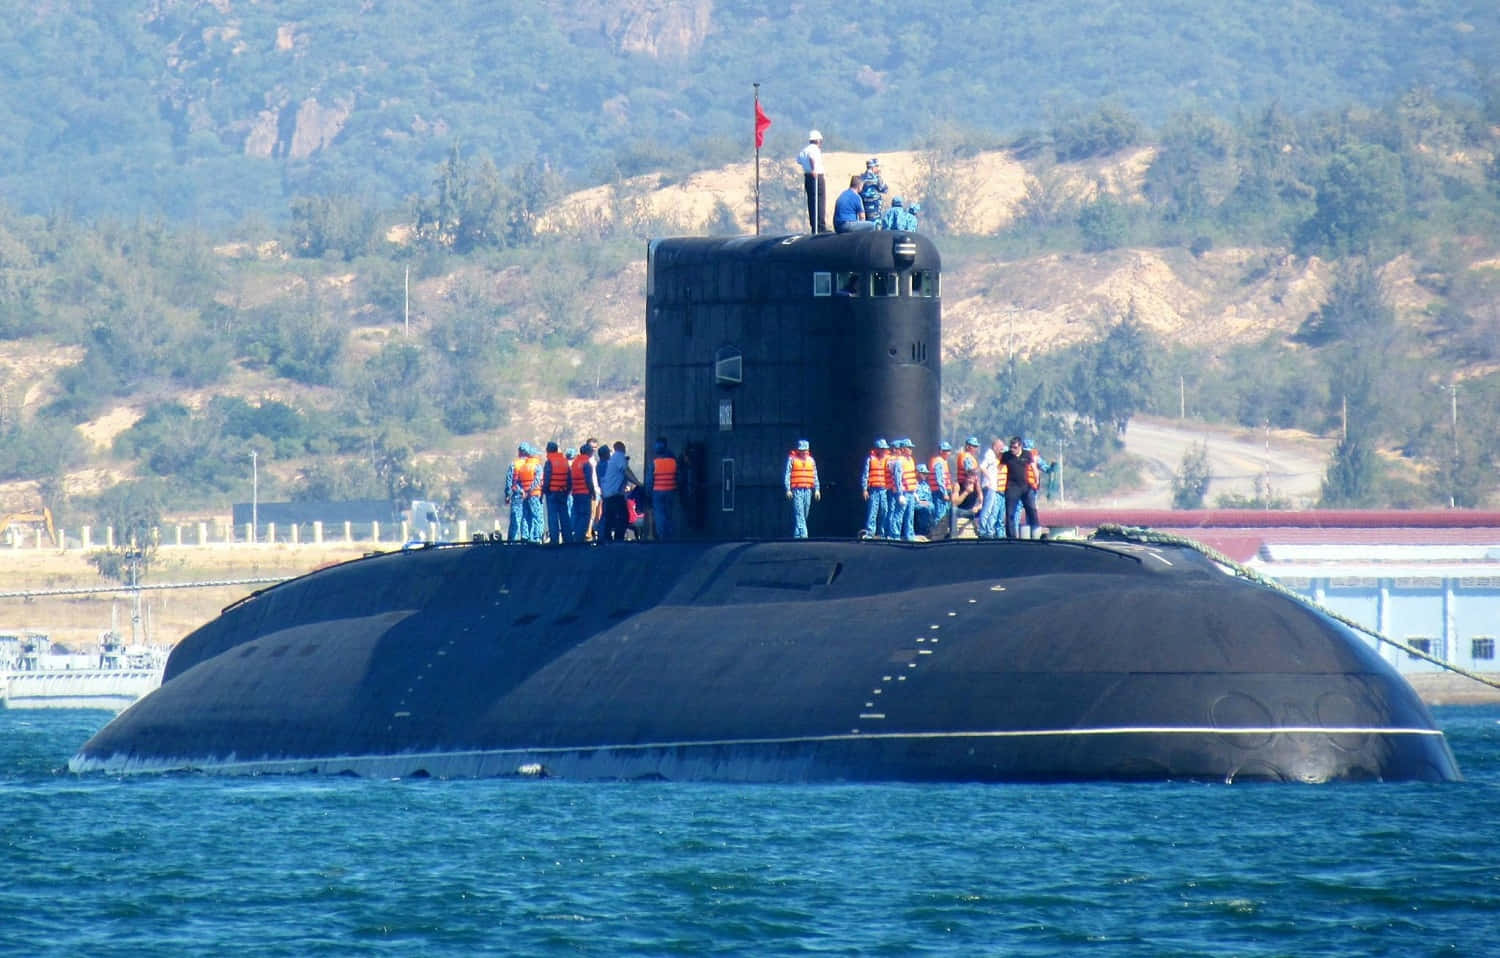 Admiral's Submarine Making Its Way Through the Deep Blue Sea